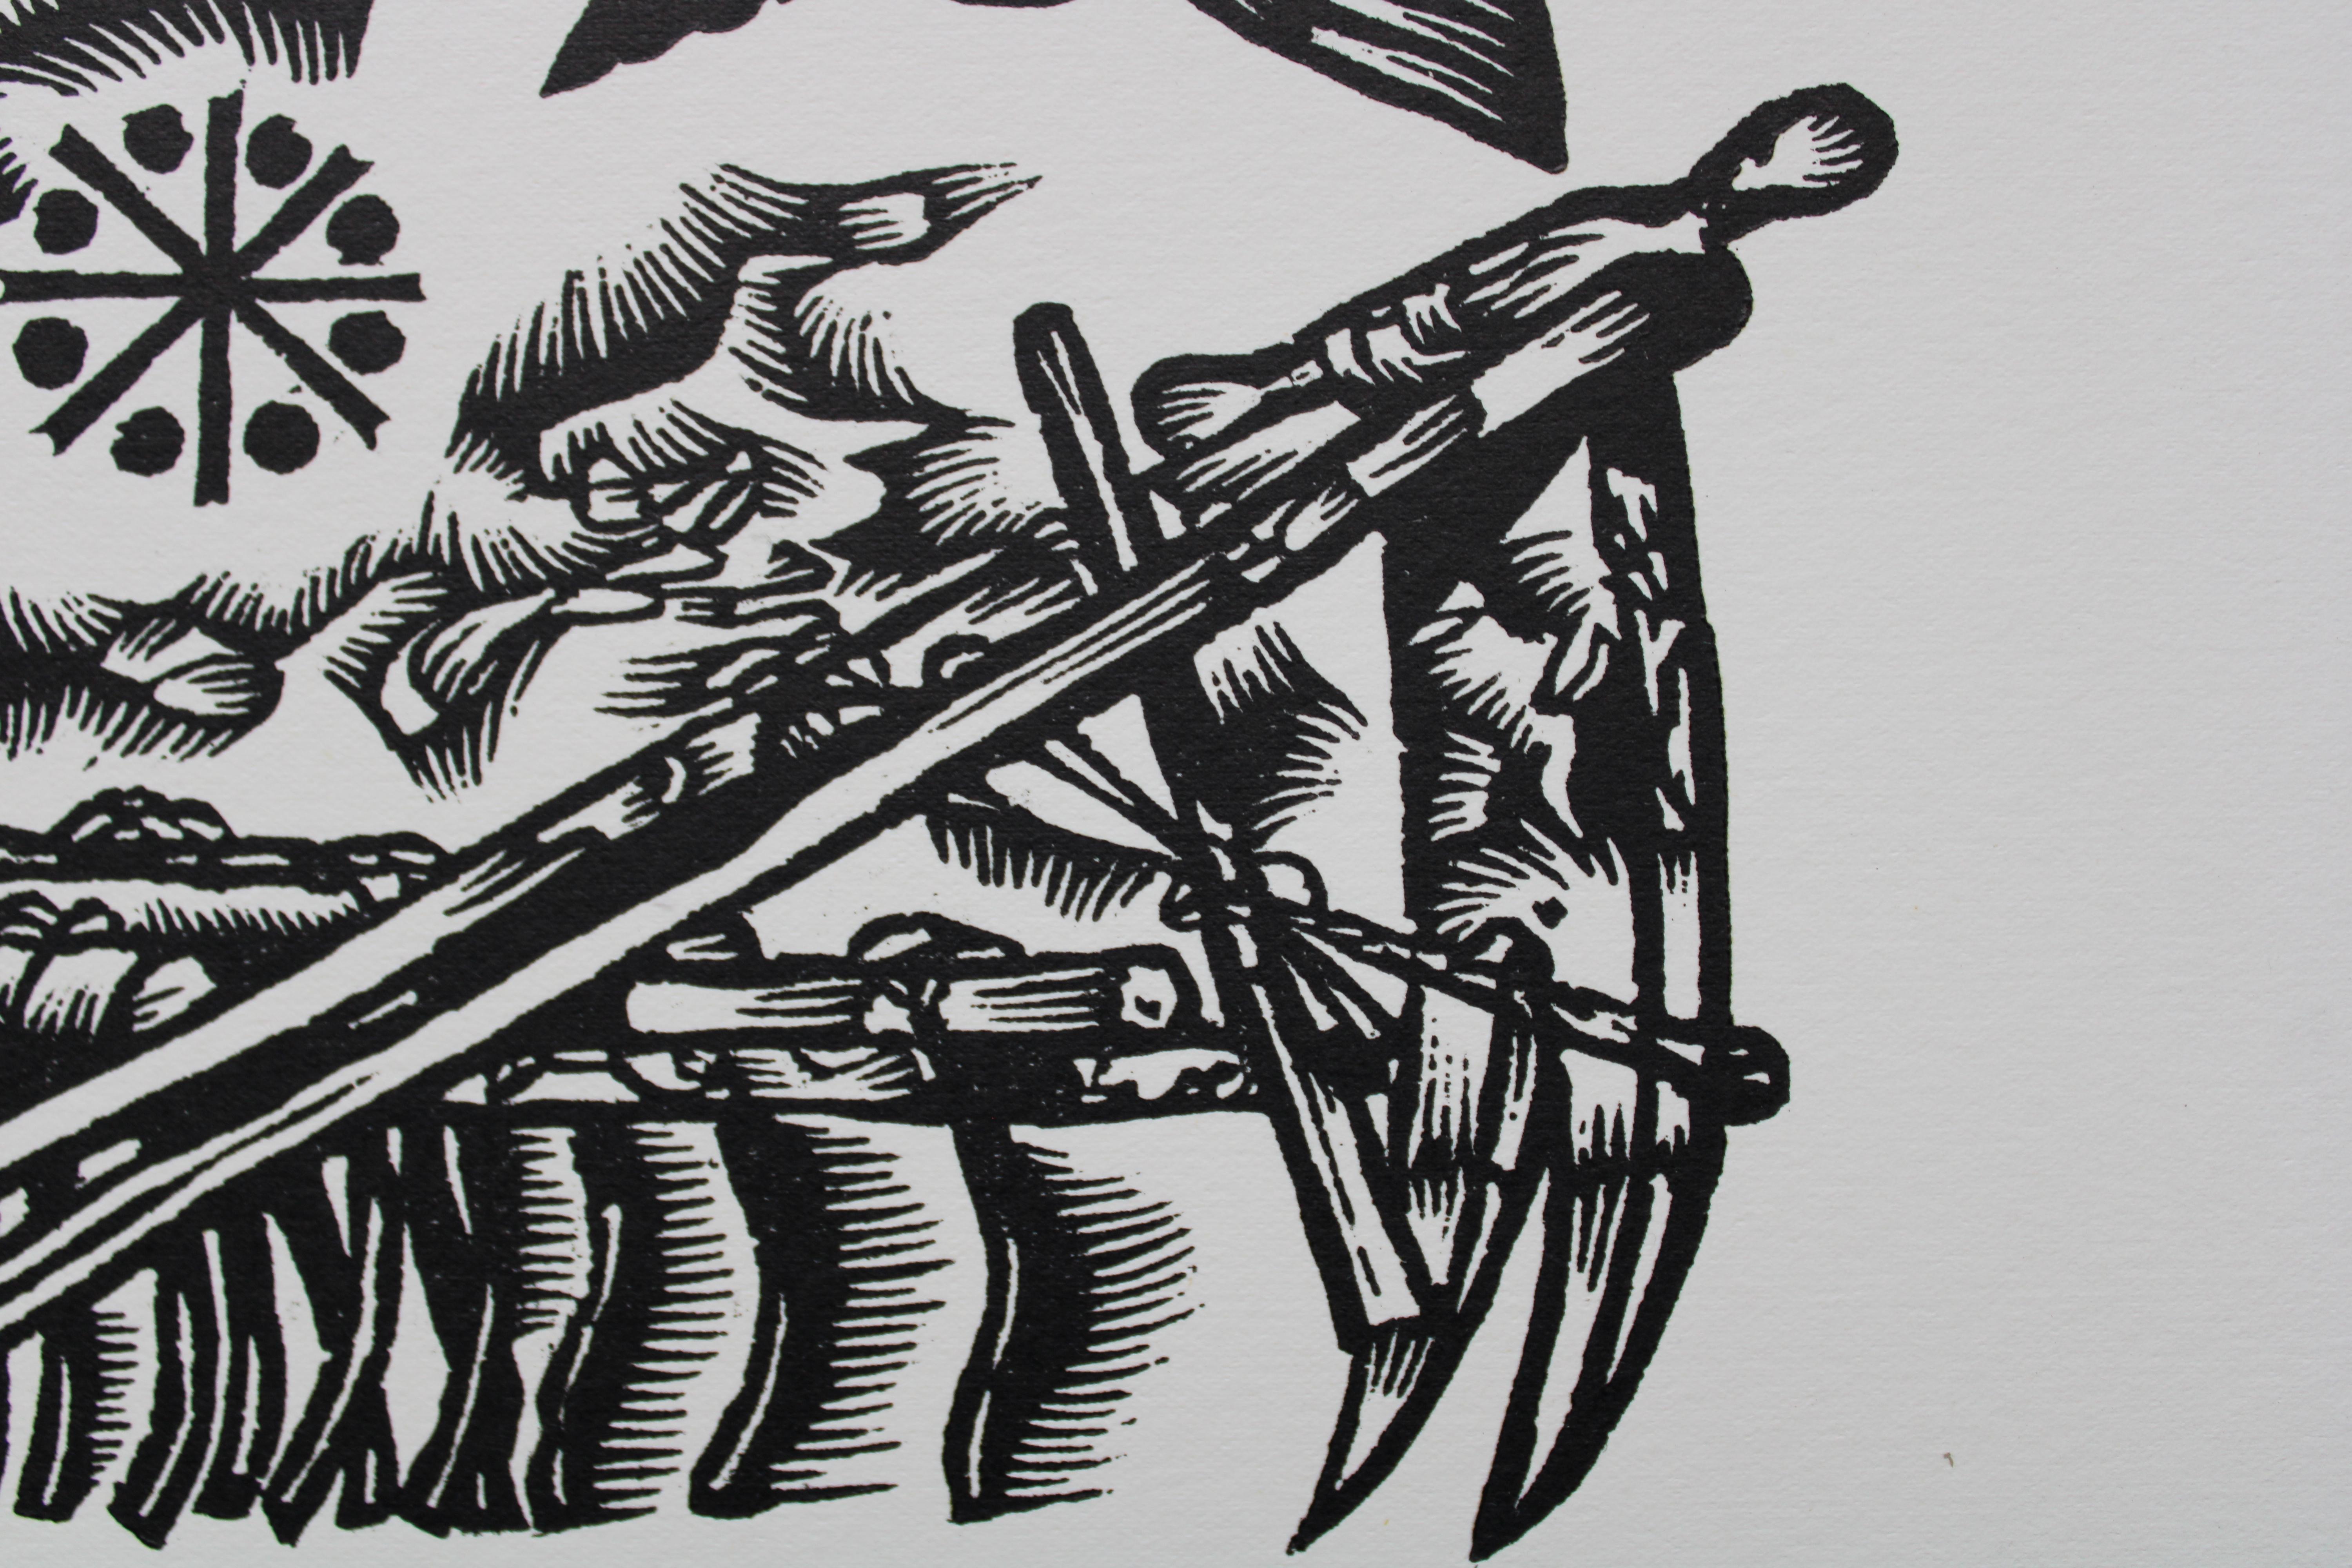 Der armer Mann. 1982. Papier, Linolschnitt, 25x34 cm (Grau), Landscape Print, von Dainis Rozkalns